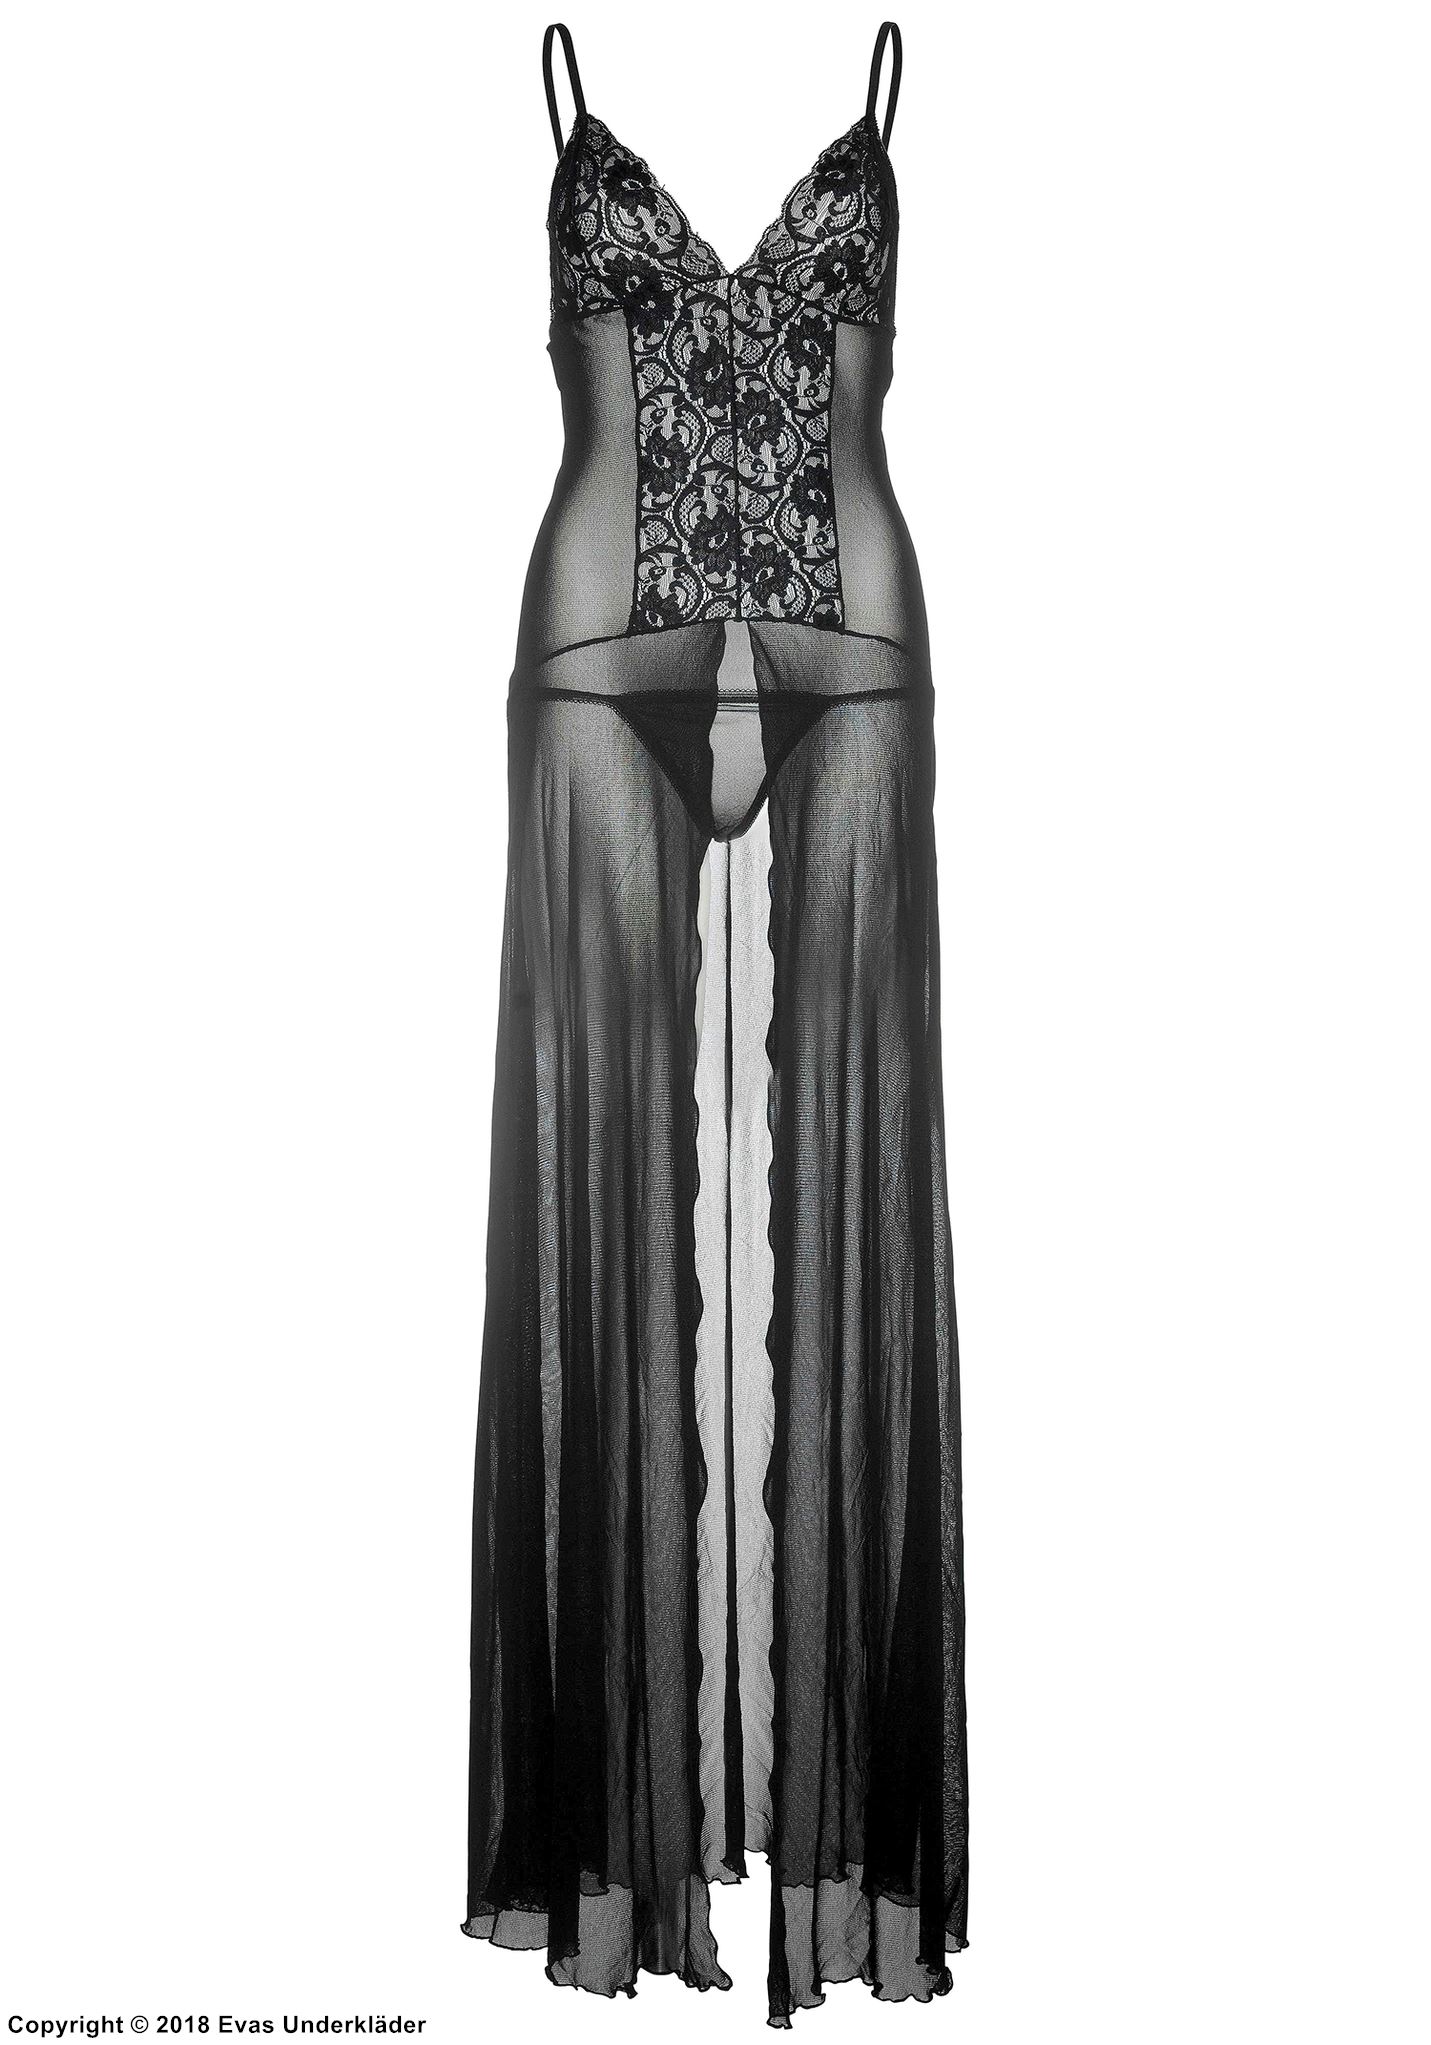 Long negligee, high slit, lace panel, mesh skirt